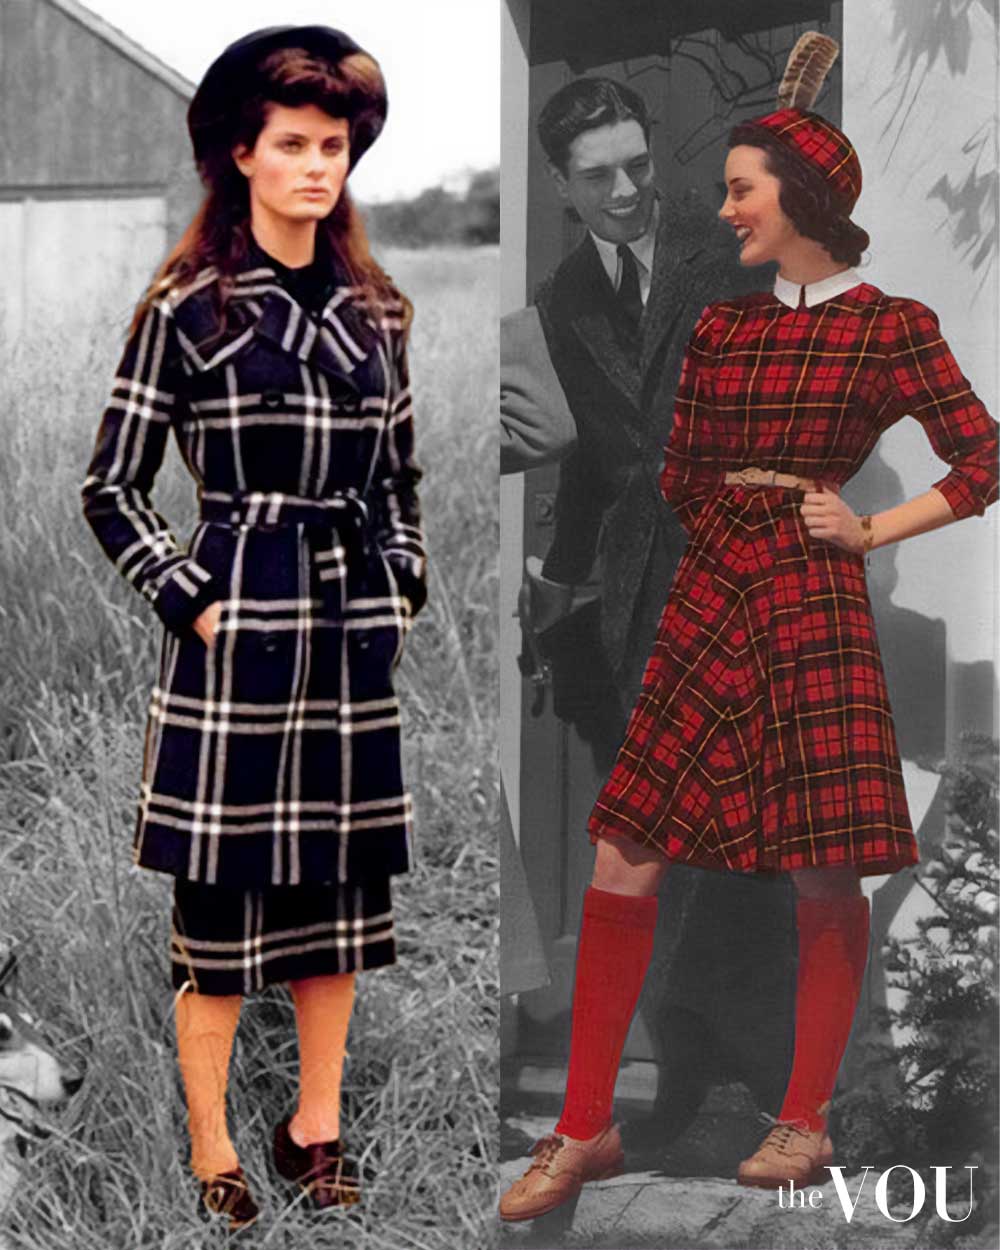 Tweeds & Plaids of 1940s fashion